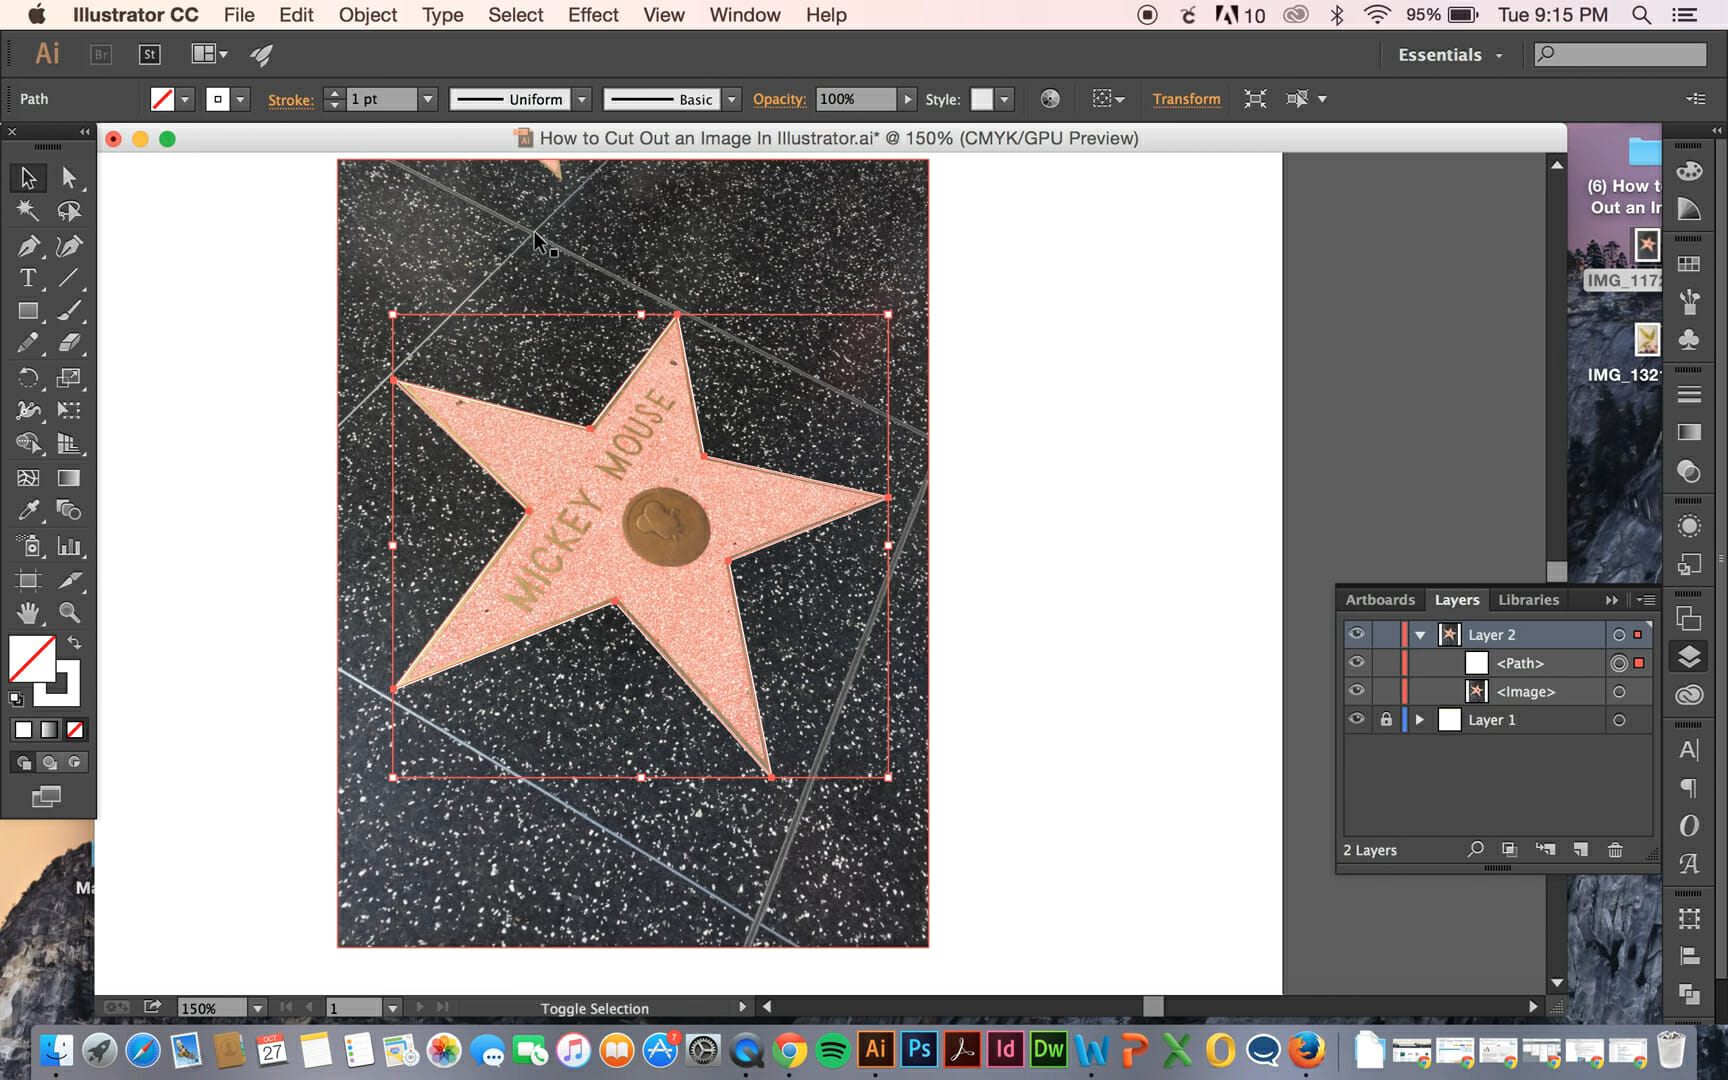 Adobe Illustrator old photo restoration software for mac